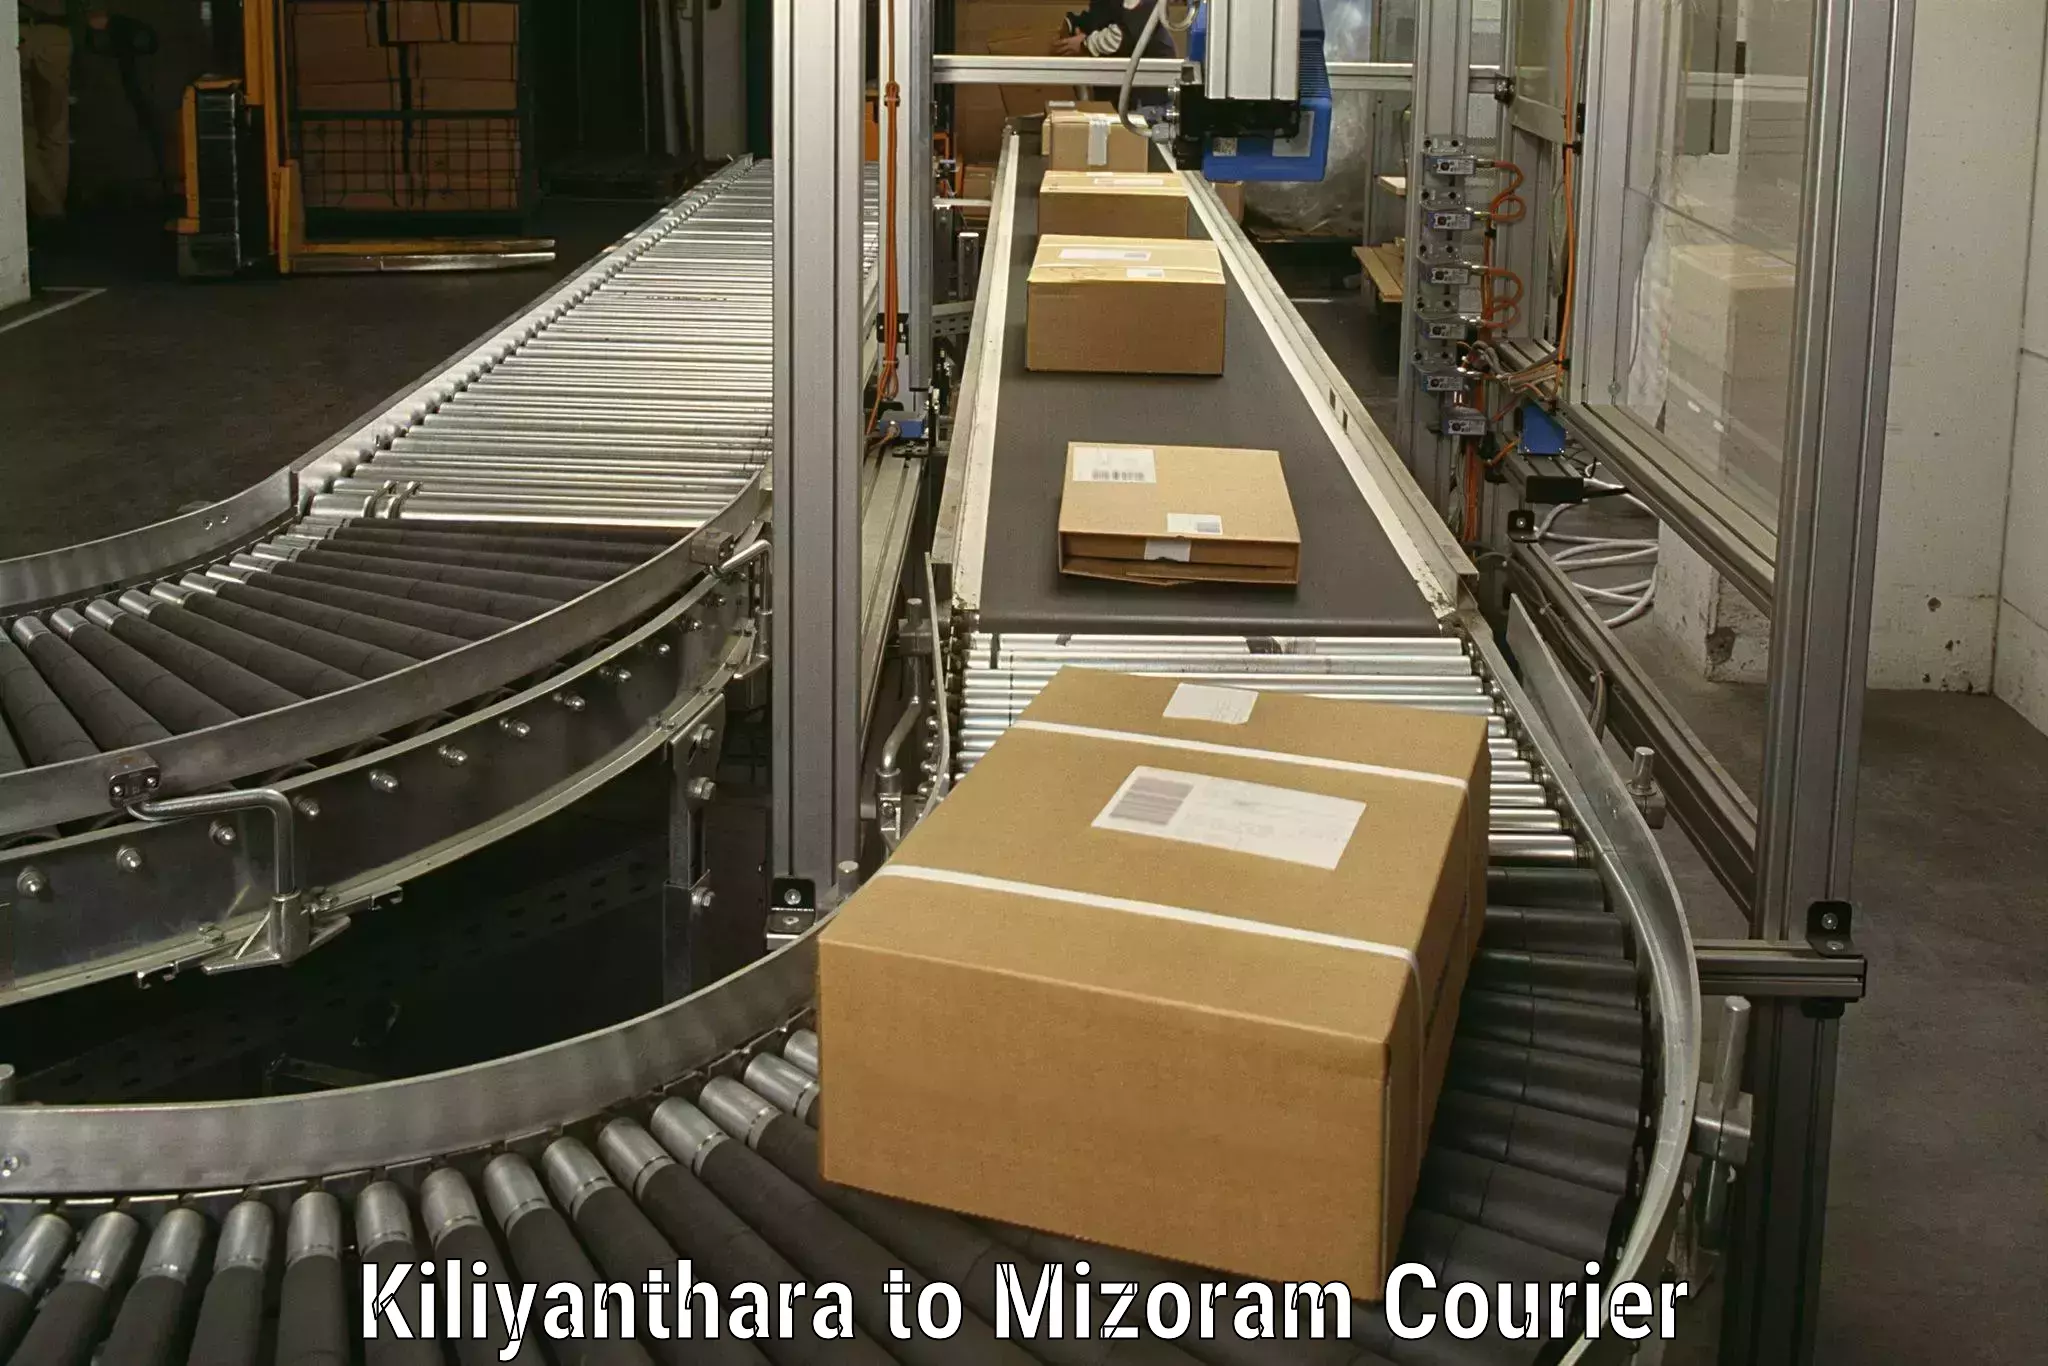 Professional moving company Kiliyanthara to Mizoram